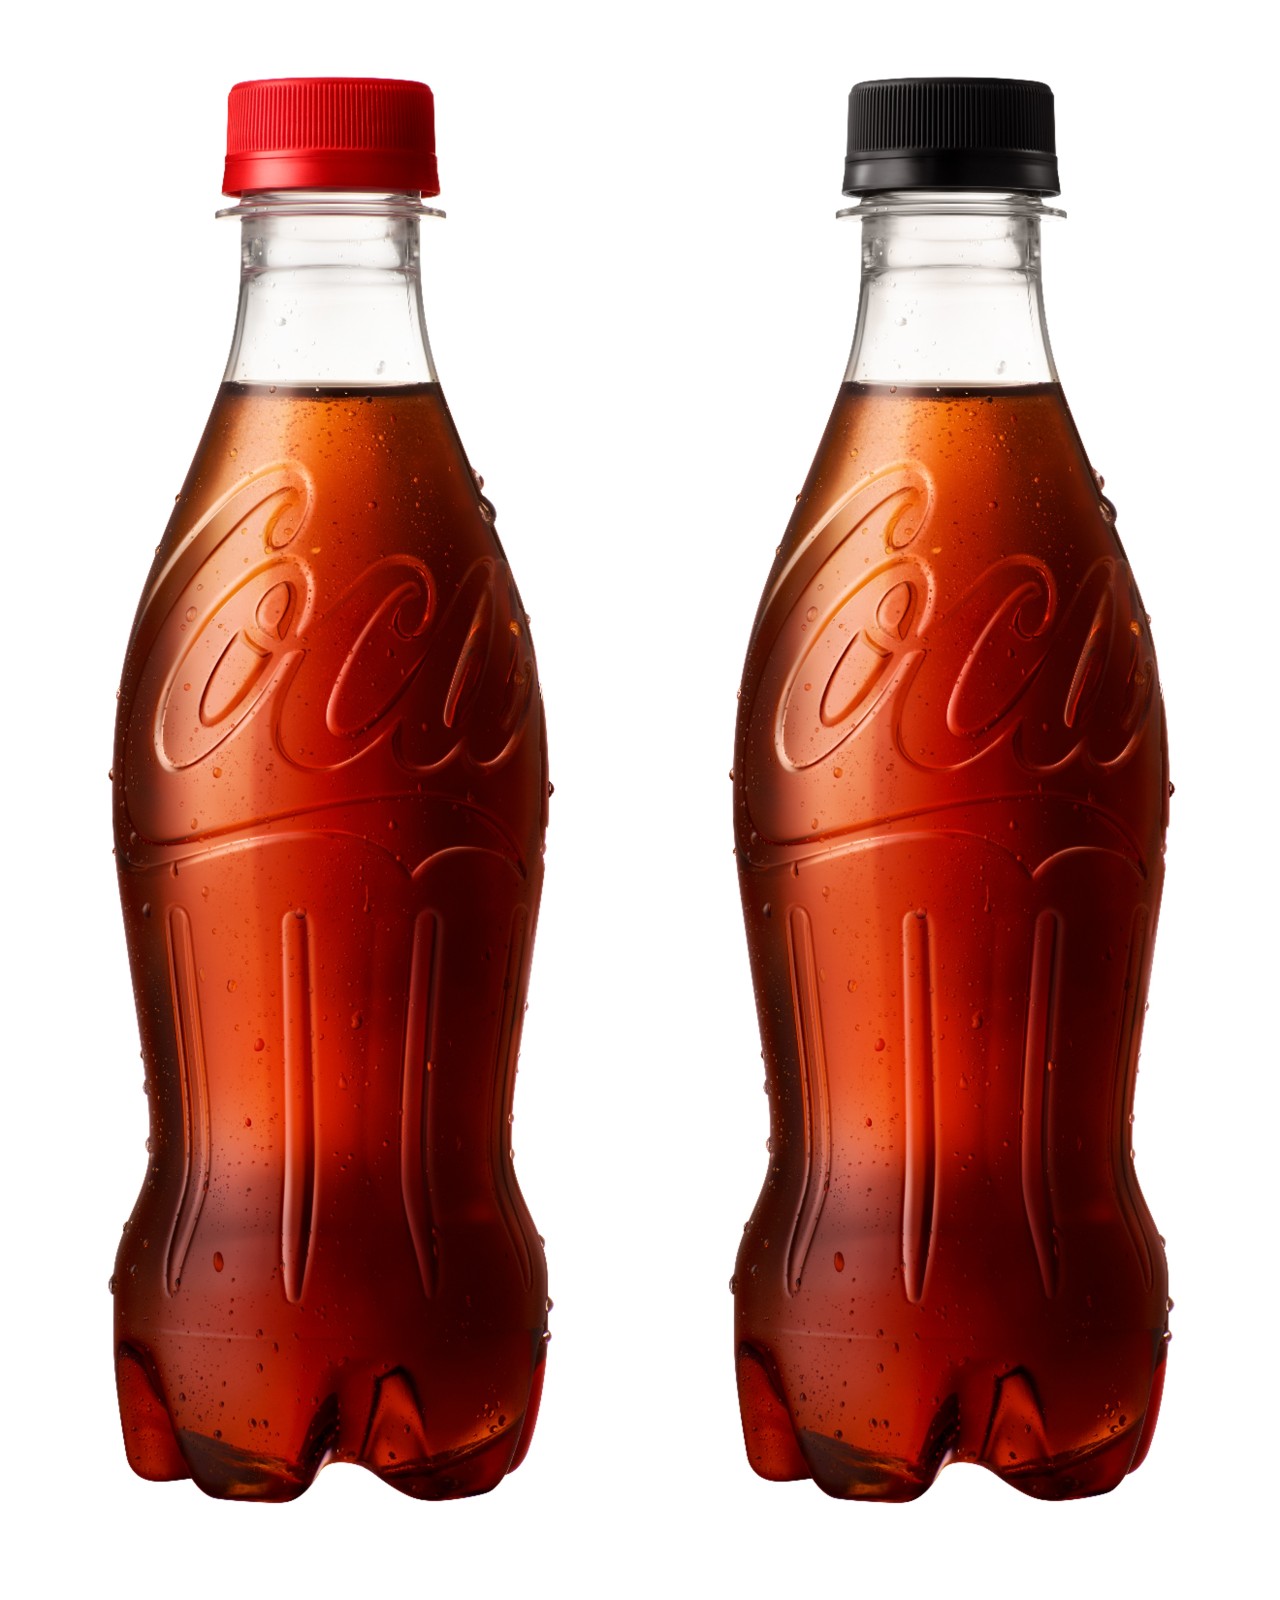 Coca-Cola debuts label-less bottles in S